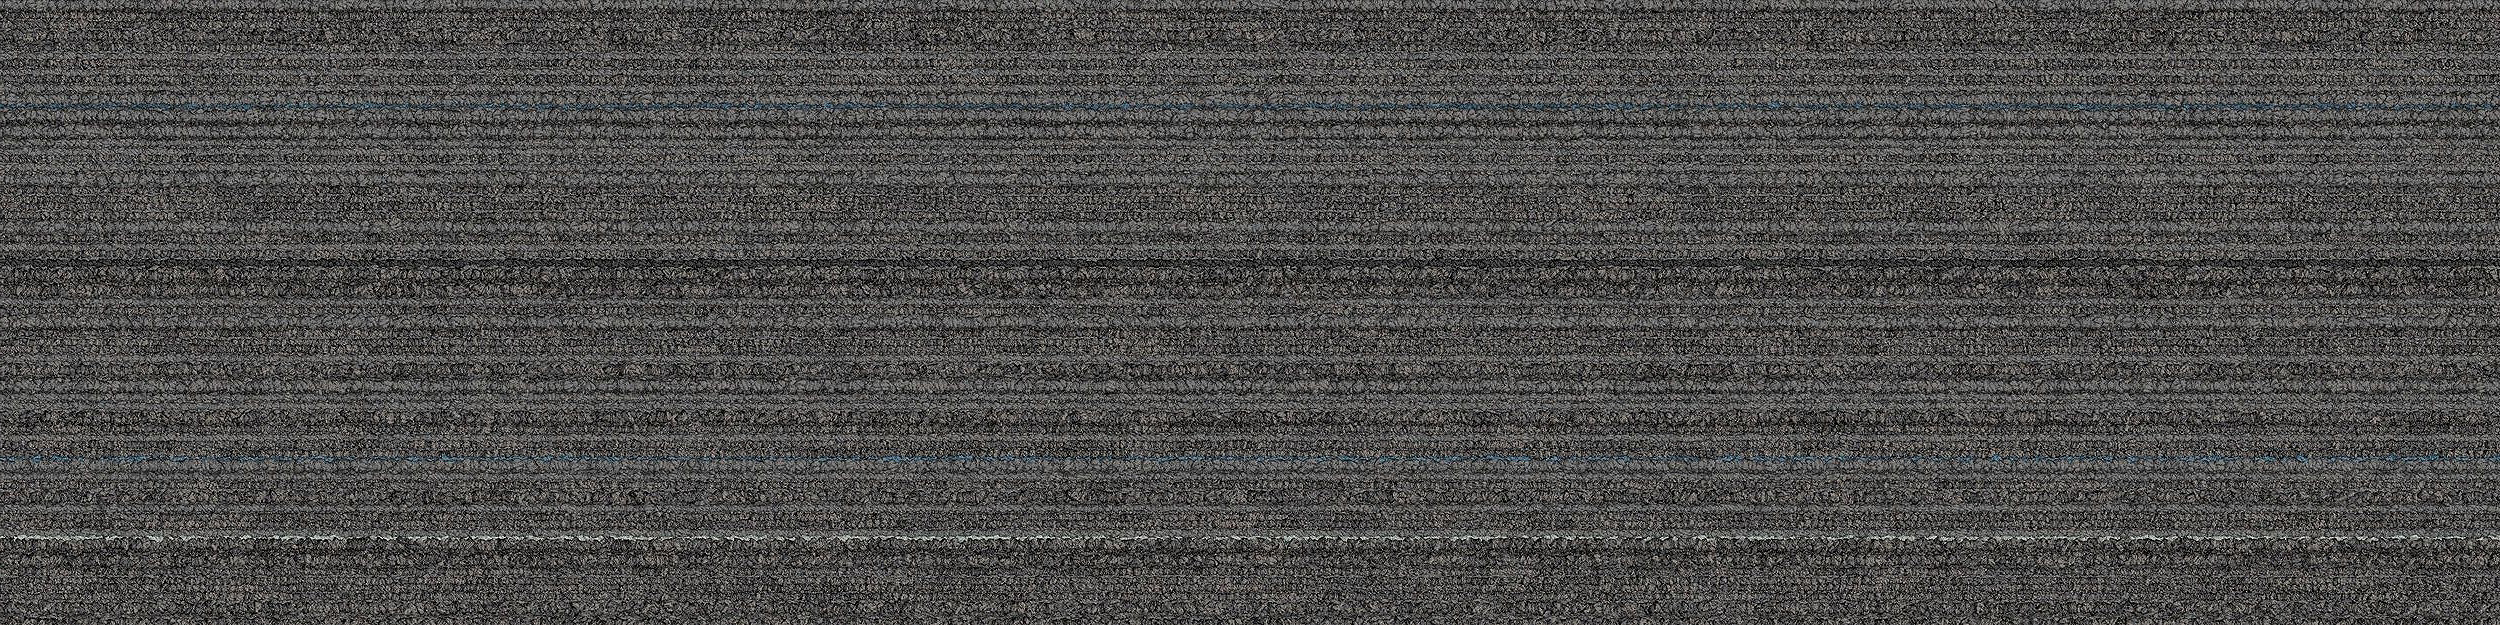 SL920 Carpet Tile In Graphite Line imagen número 8